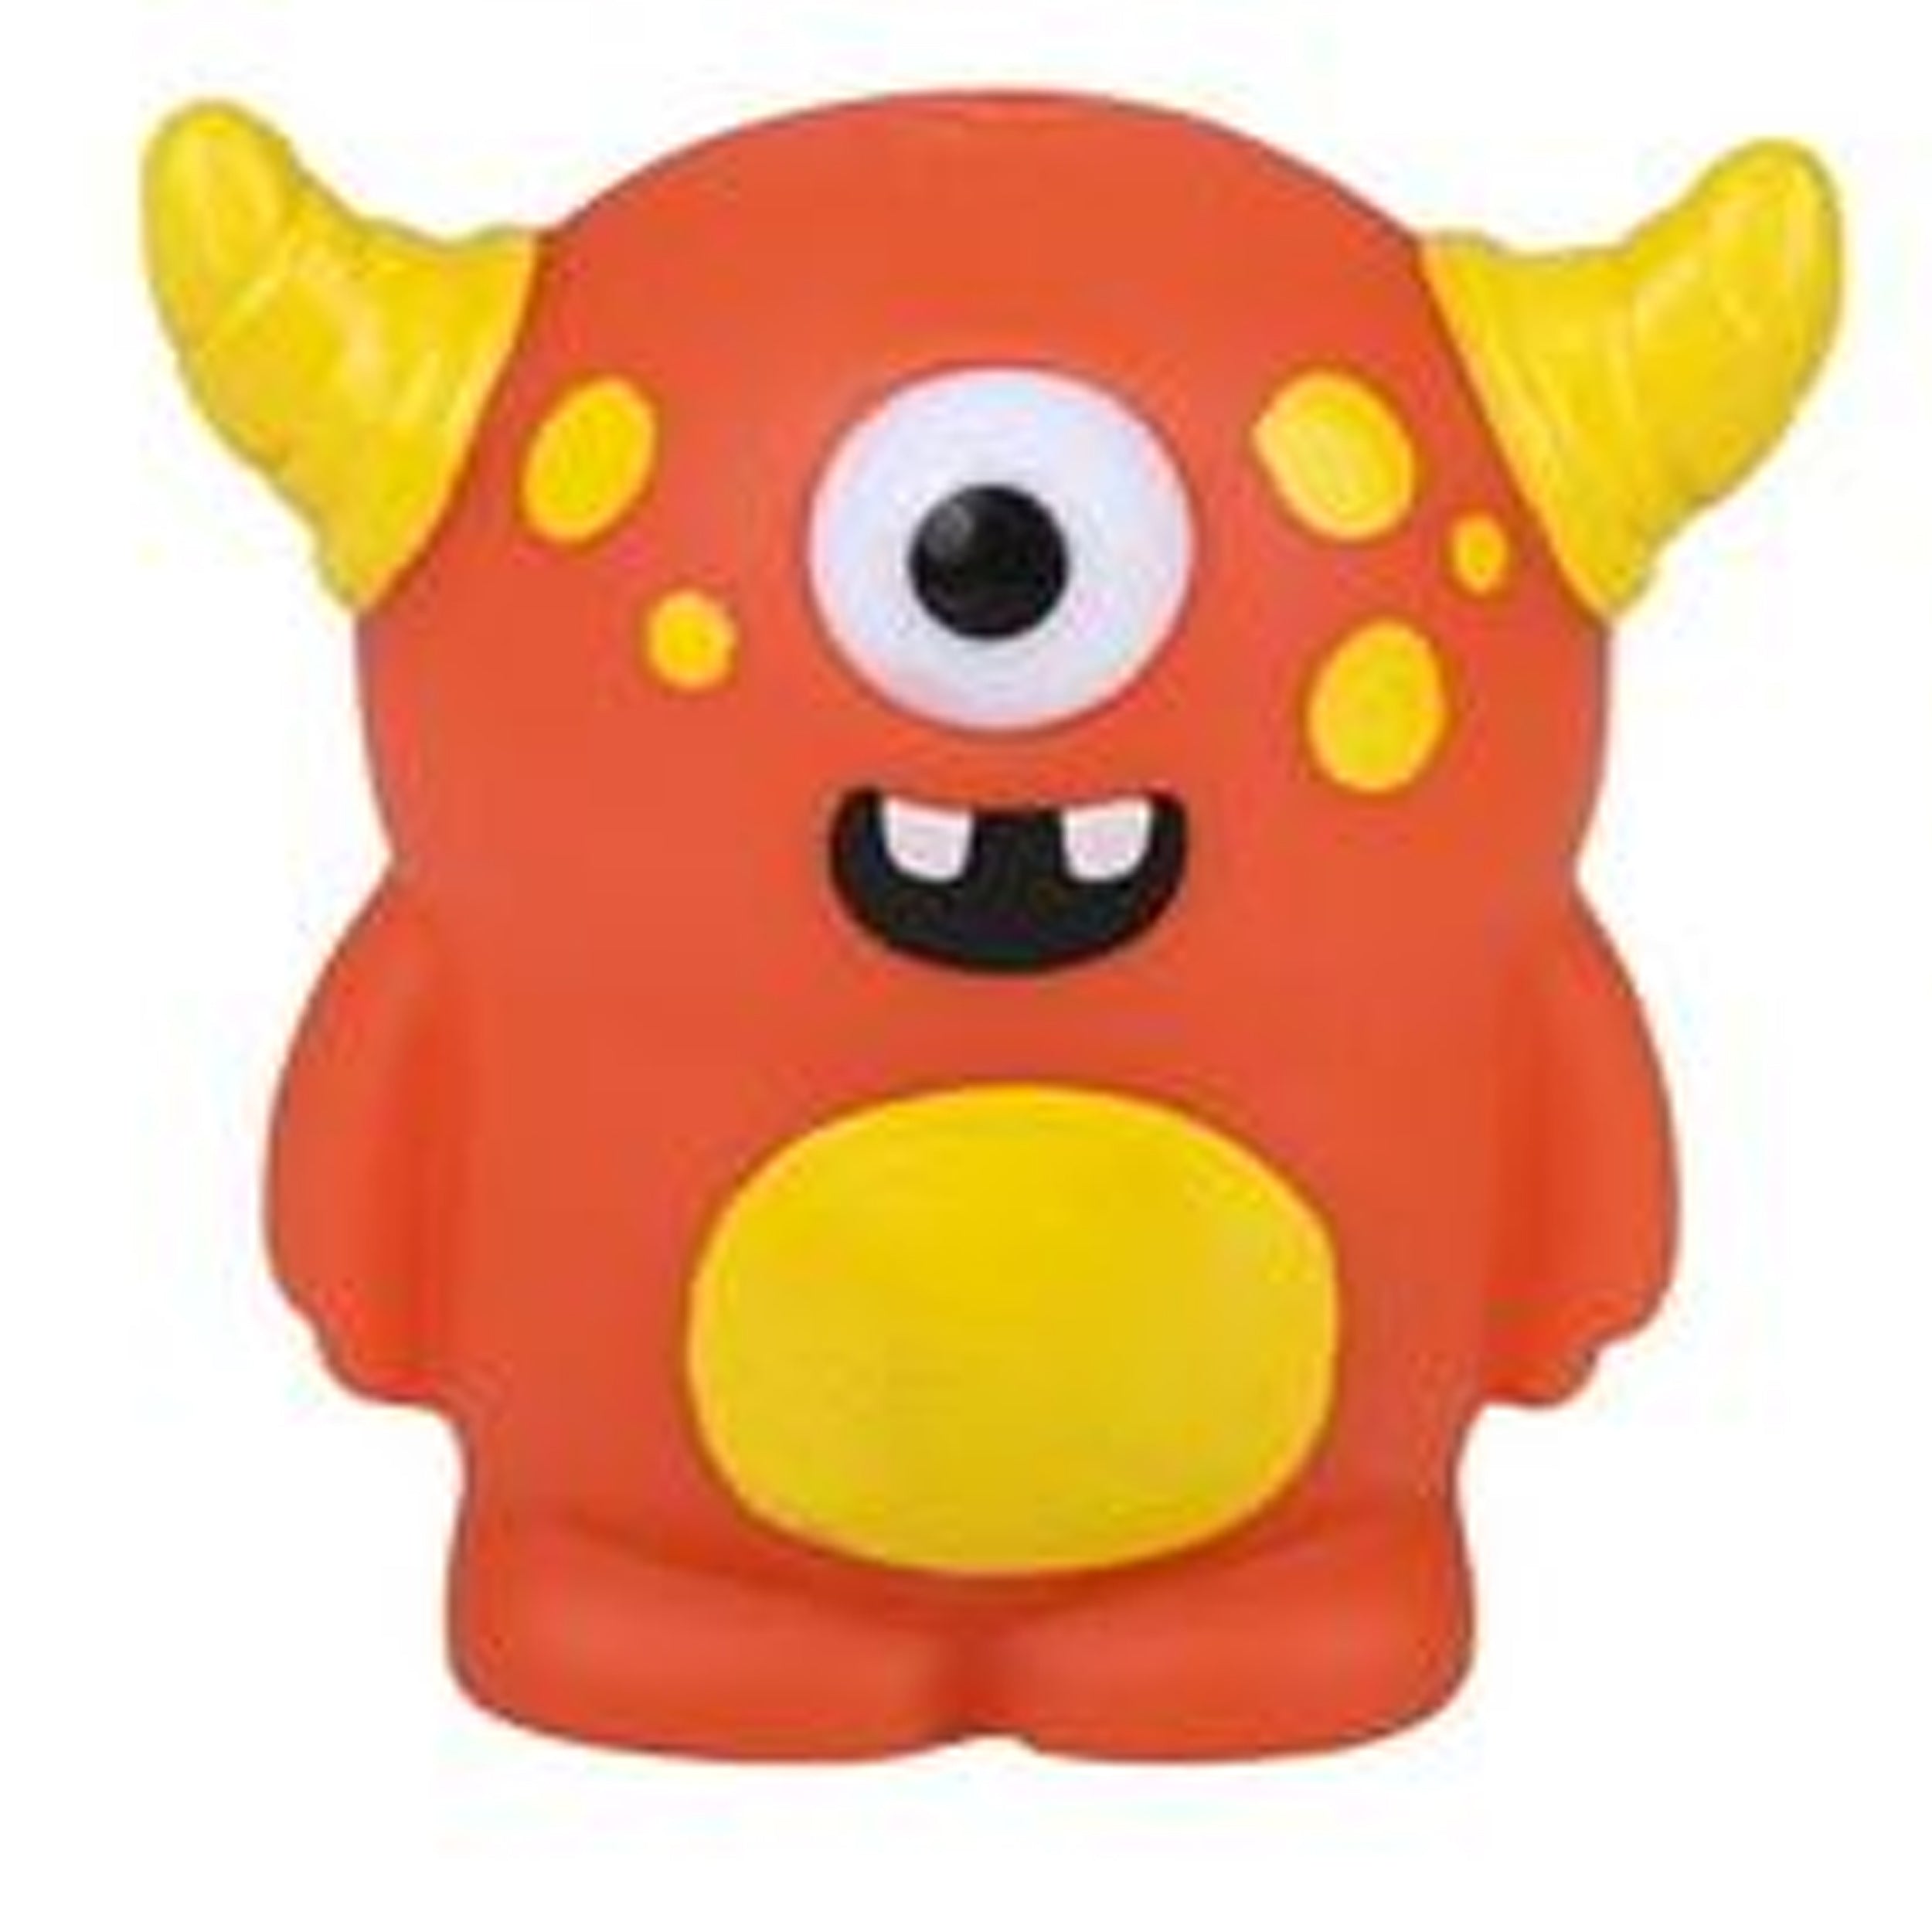 Monster Pop out Eyes Squishy kids Toys (1 Dorzen=$24.99)